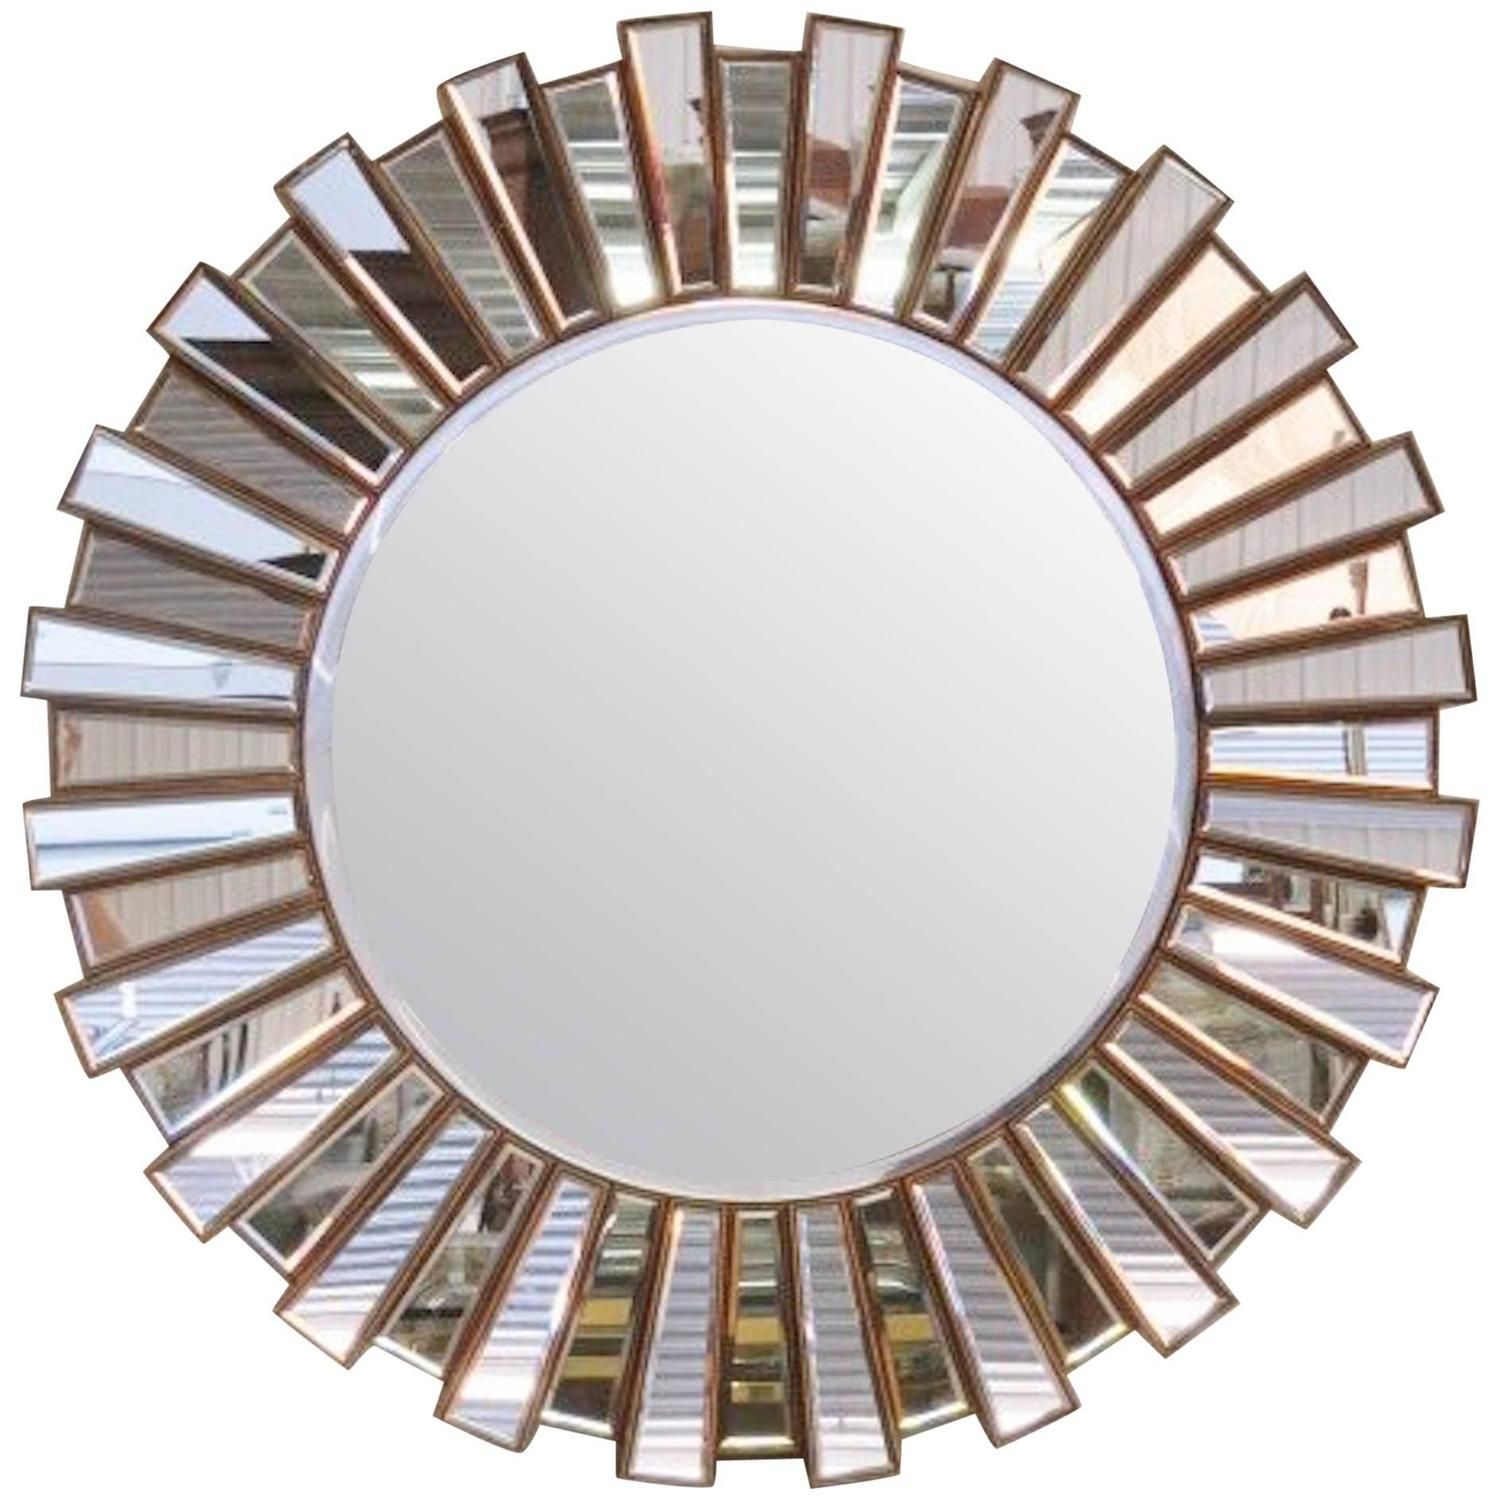 Large Mirrored Sunburst Mirror At 1stdibs For 2017 Sunburst Mirrored Wall Art (View 5 of 20)